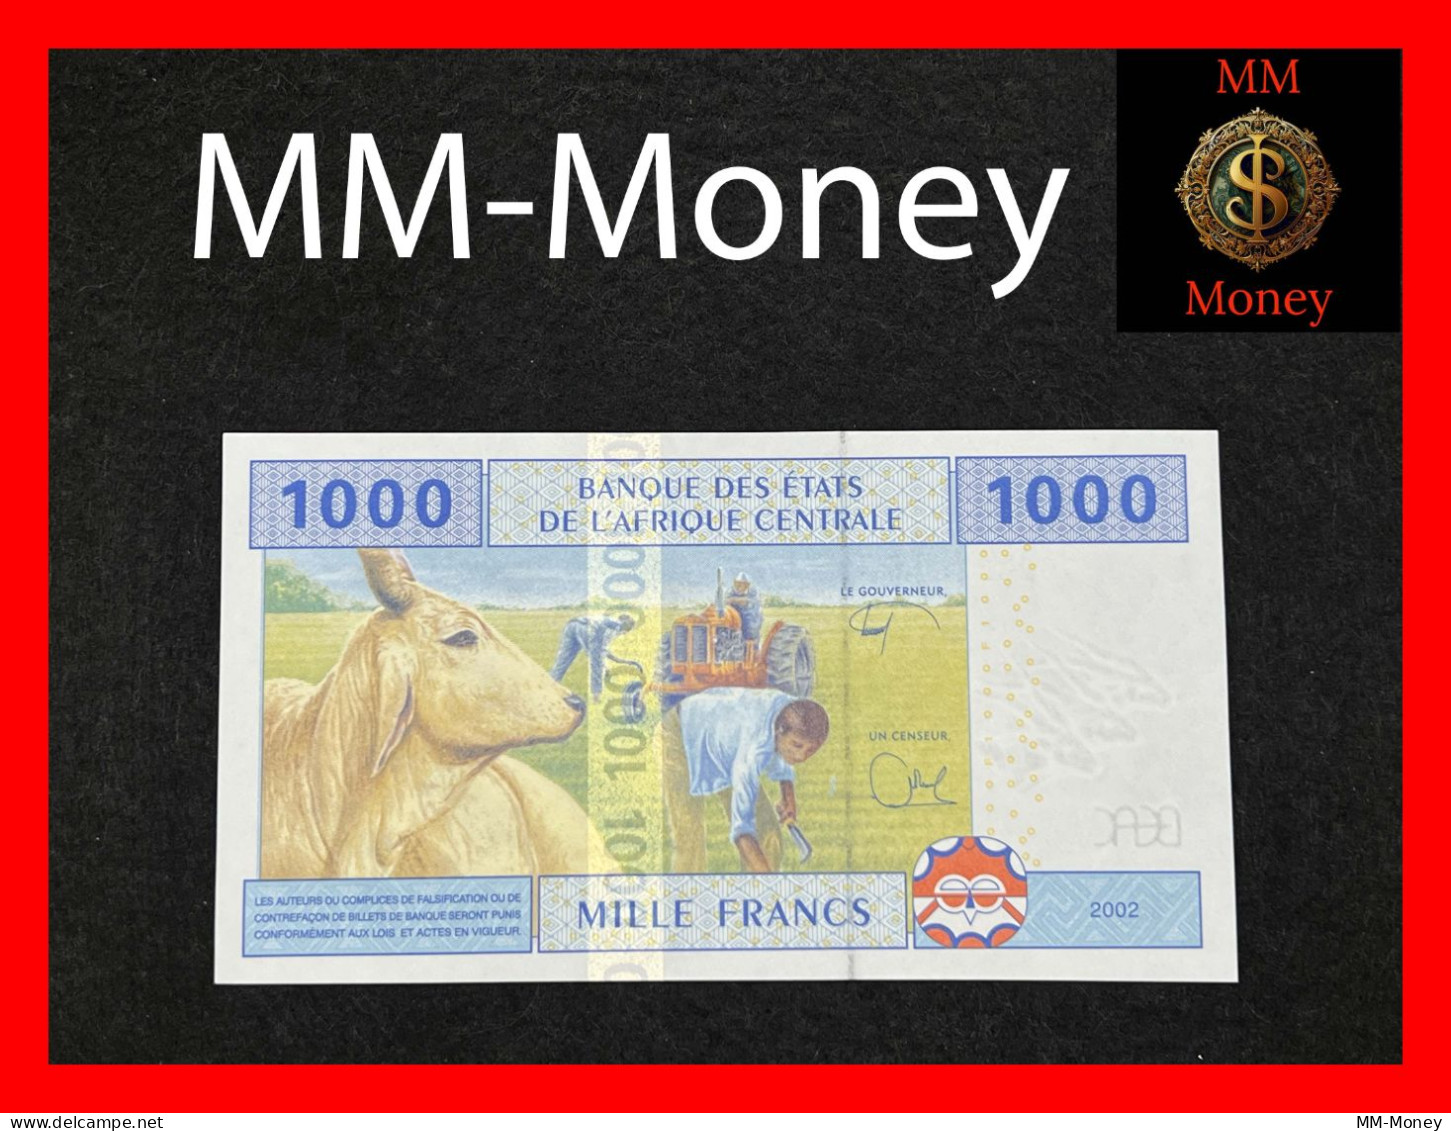 Central African States  "U"  Cameroun 1.000 1000 Francs 2002  P. 207 U  *paper Note*  UNC - Zentralafrikanische Staaten